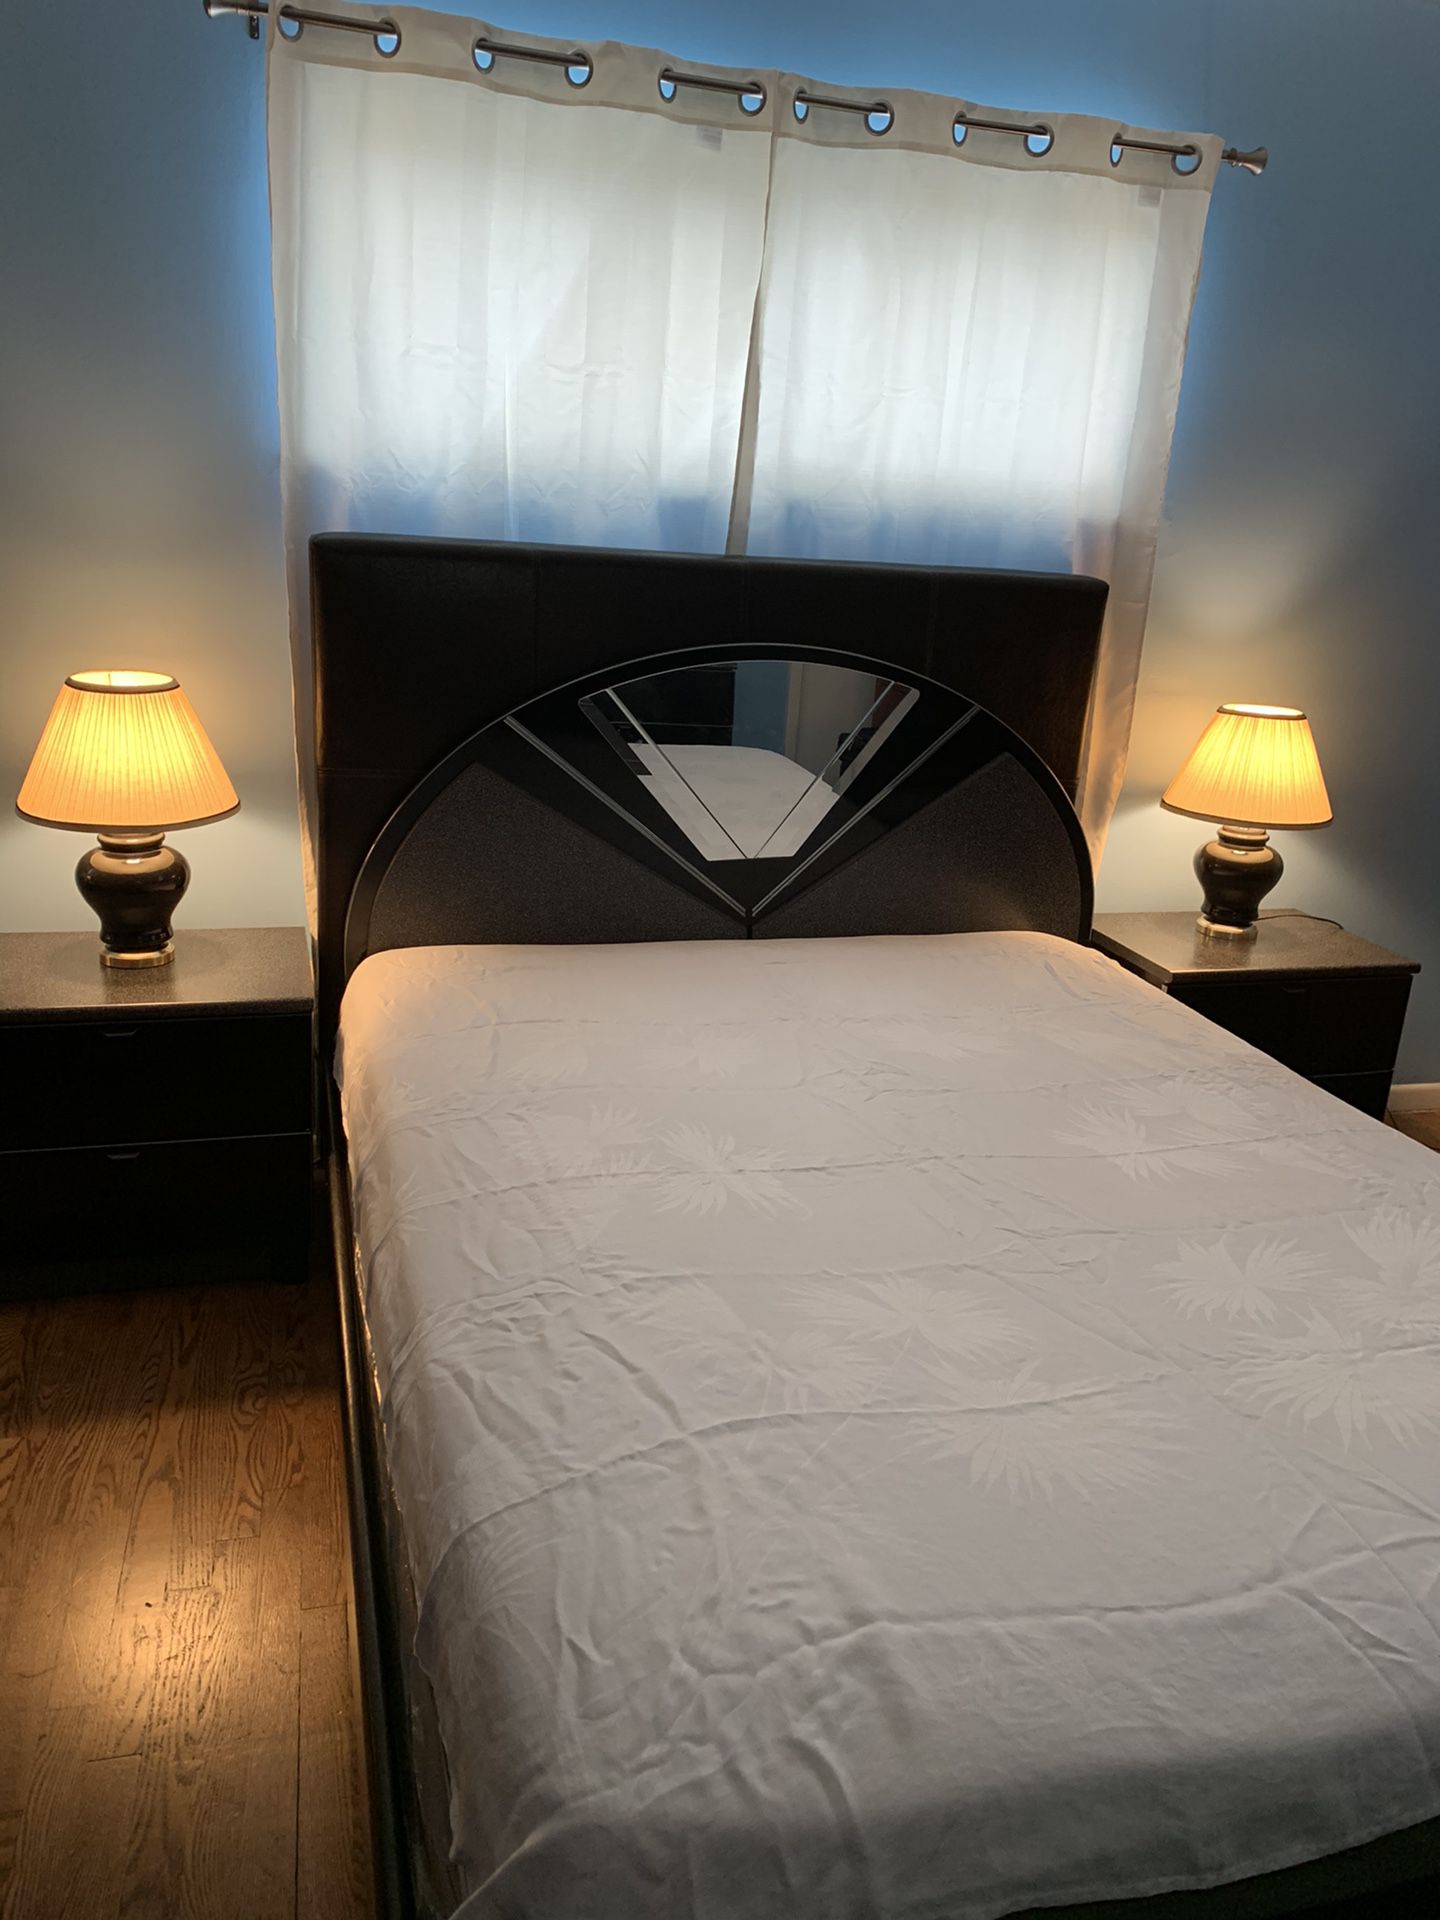 Queen Bedroom Set with matching Lamp